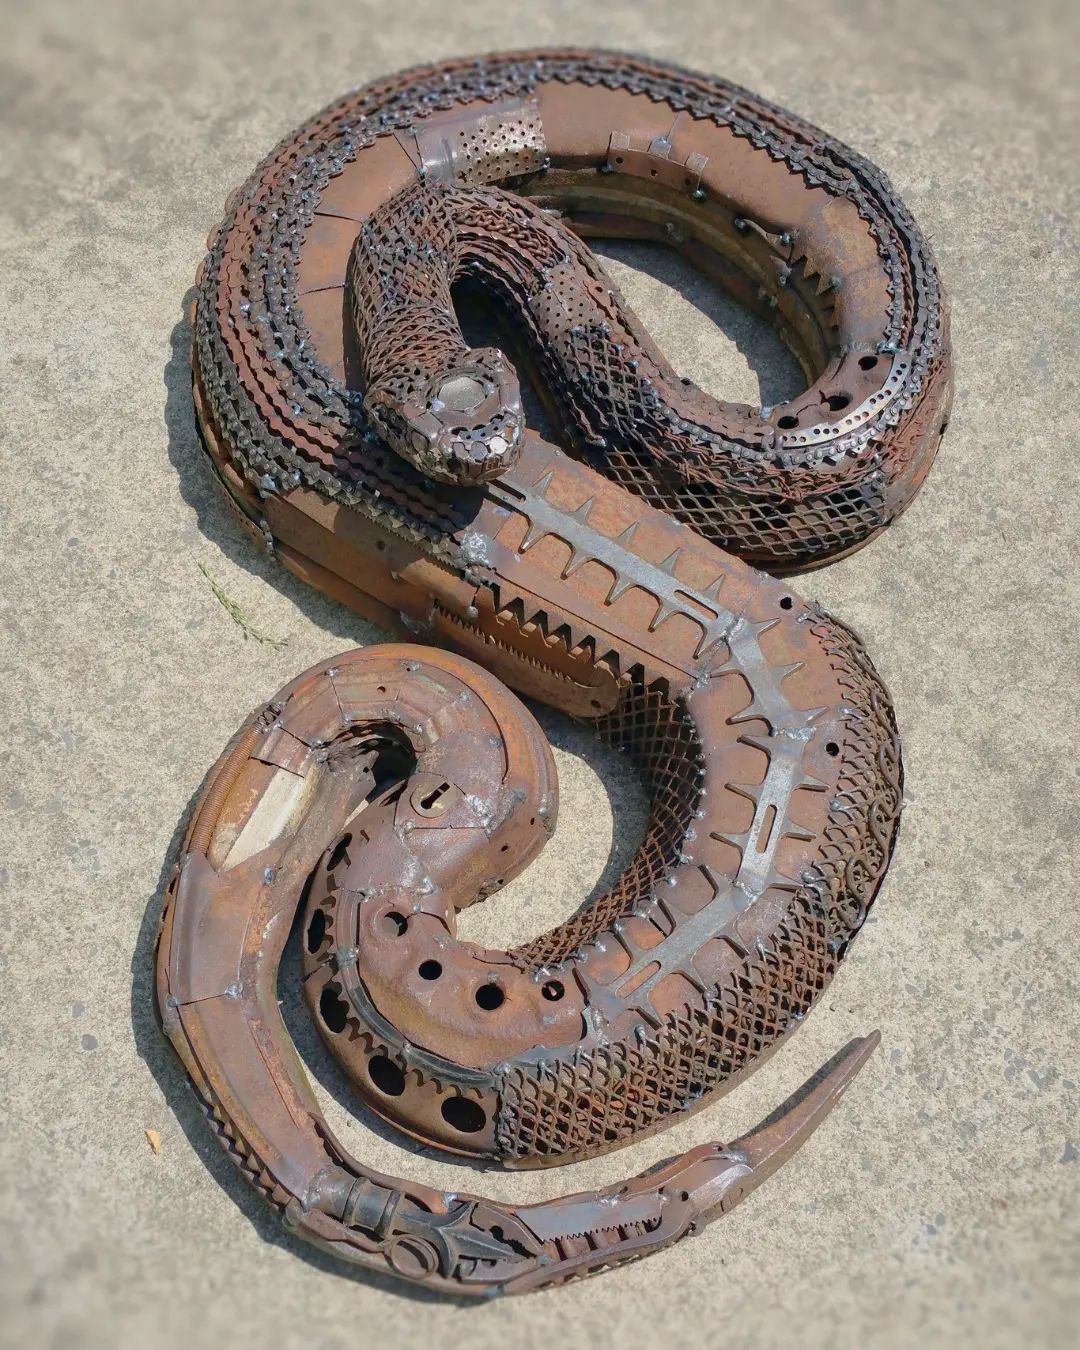 Amazingly Precise Scrap Metal Animal Sculptures By Jk Brown (10)